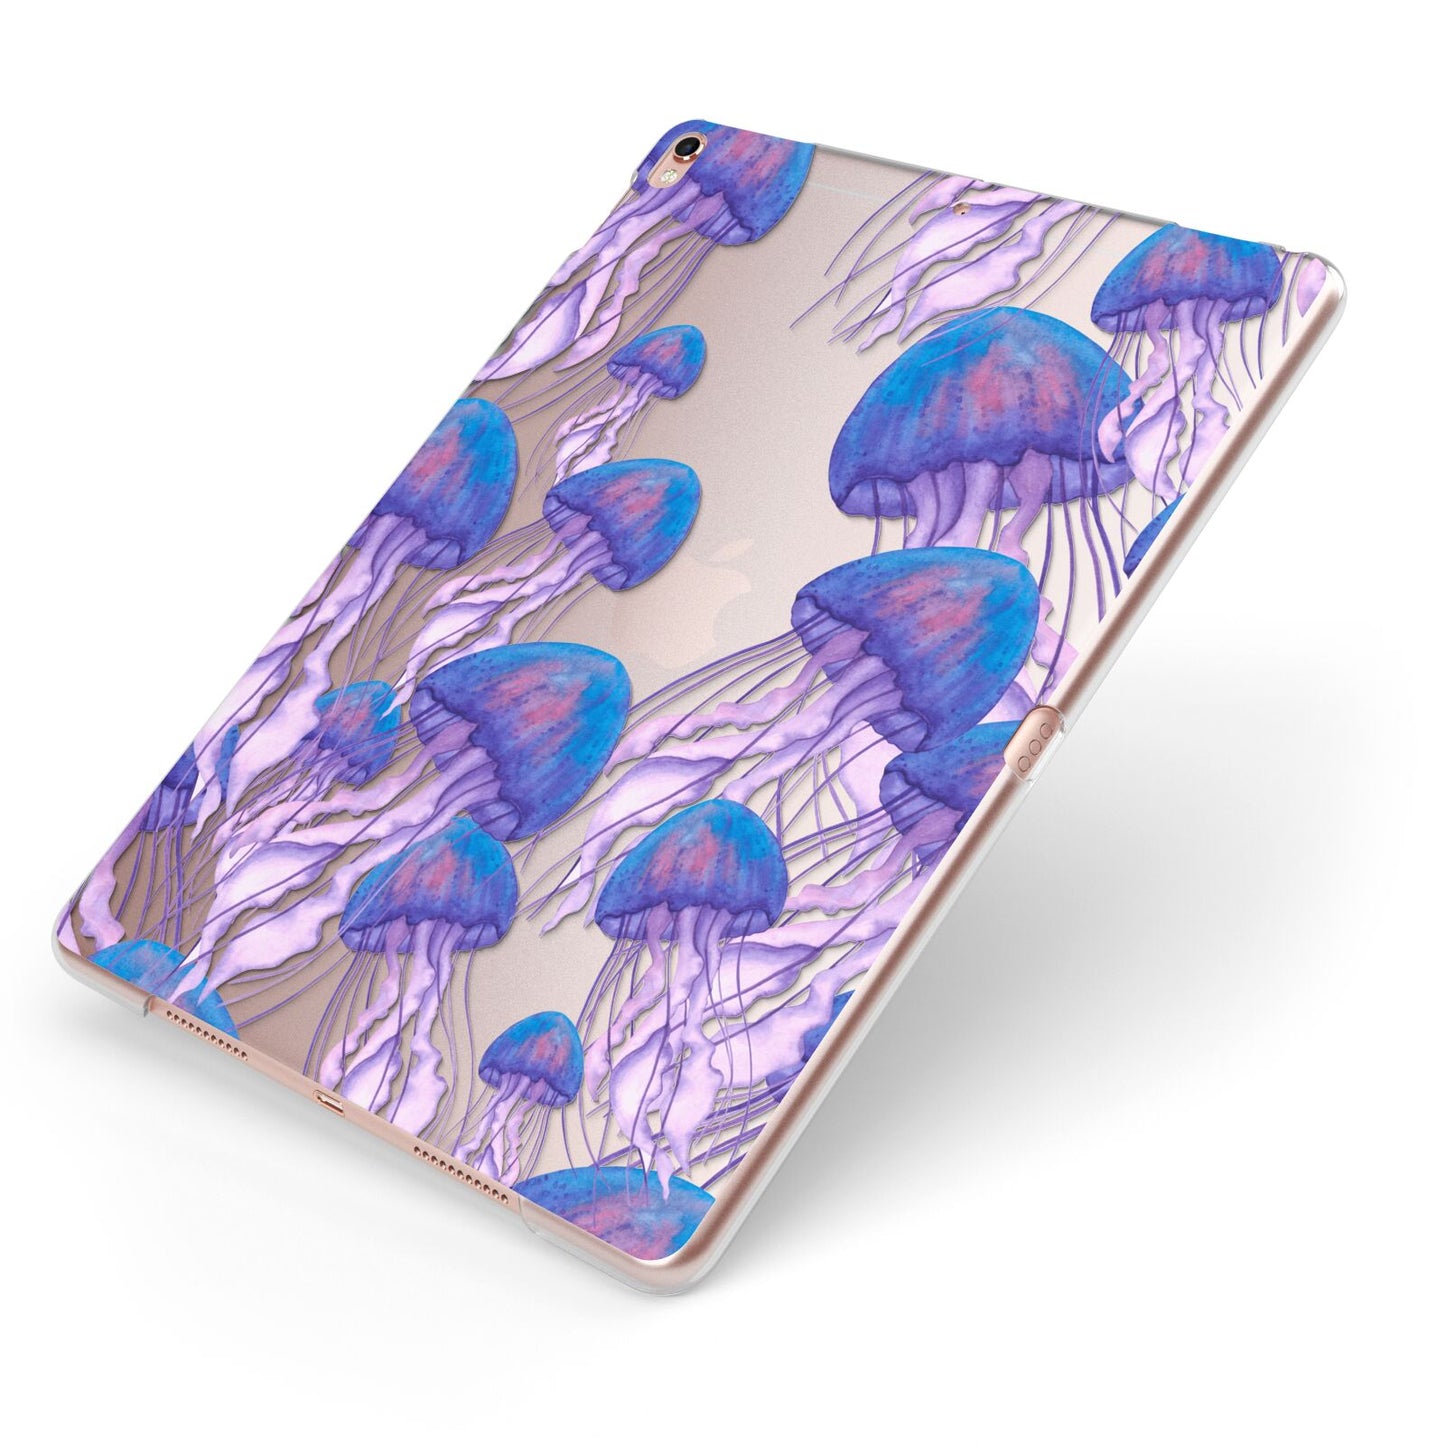 Jellyfish Apple iPad Case on Rose Gold iPad Side View